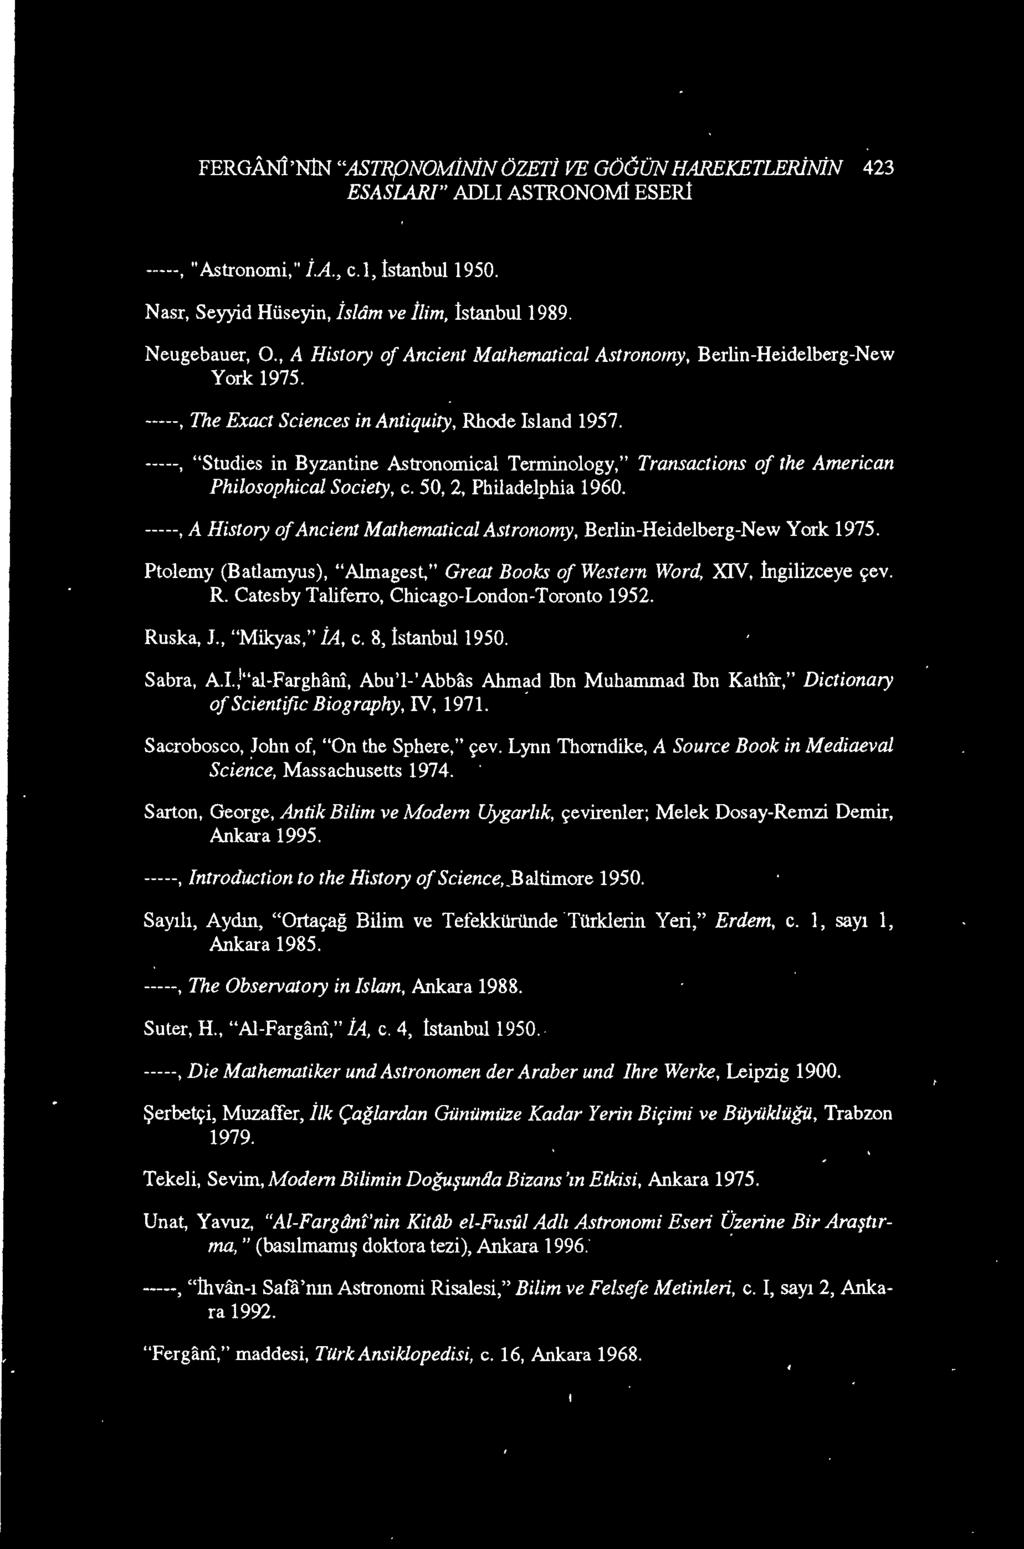 Catesby Taliferro, Chicago-London-Toronto 1952. Ruska, 1., "Mikyas," İA, c. 8, İstanbul 1950. Sabra, A.i.!"a1-Pargham, Abu'l-' Abbas Ahmad ıbn Muhammad ıbn Kathir," Dictionary of Scientific Biography, N, 1971.